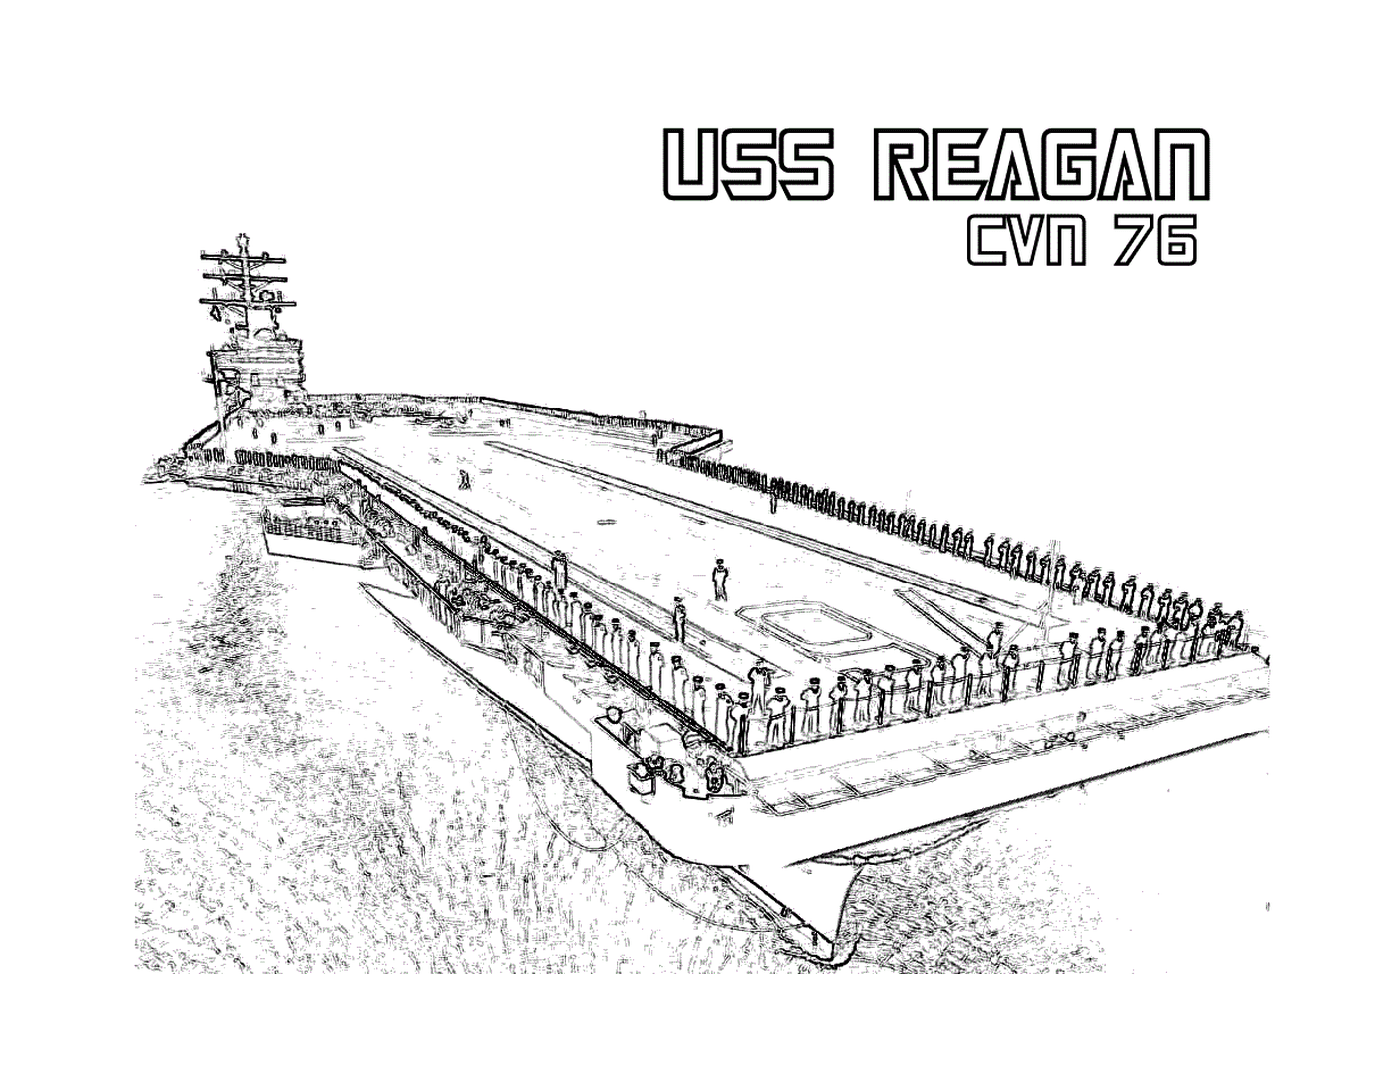  The USS Reagan CVN-70 